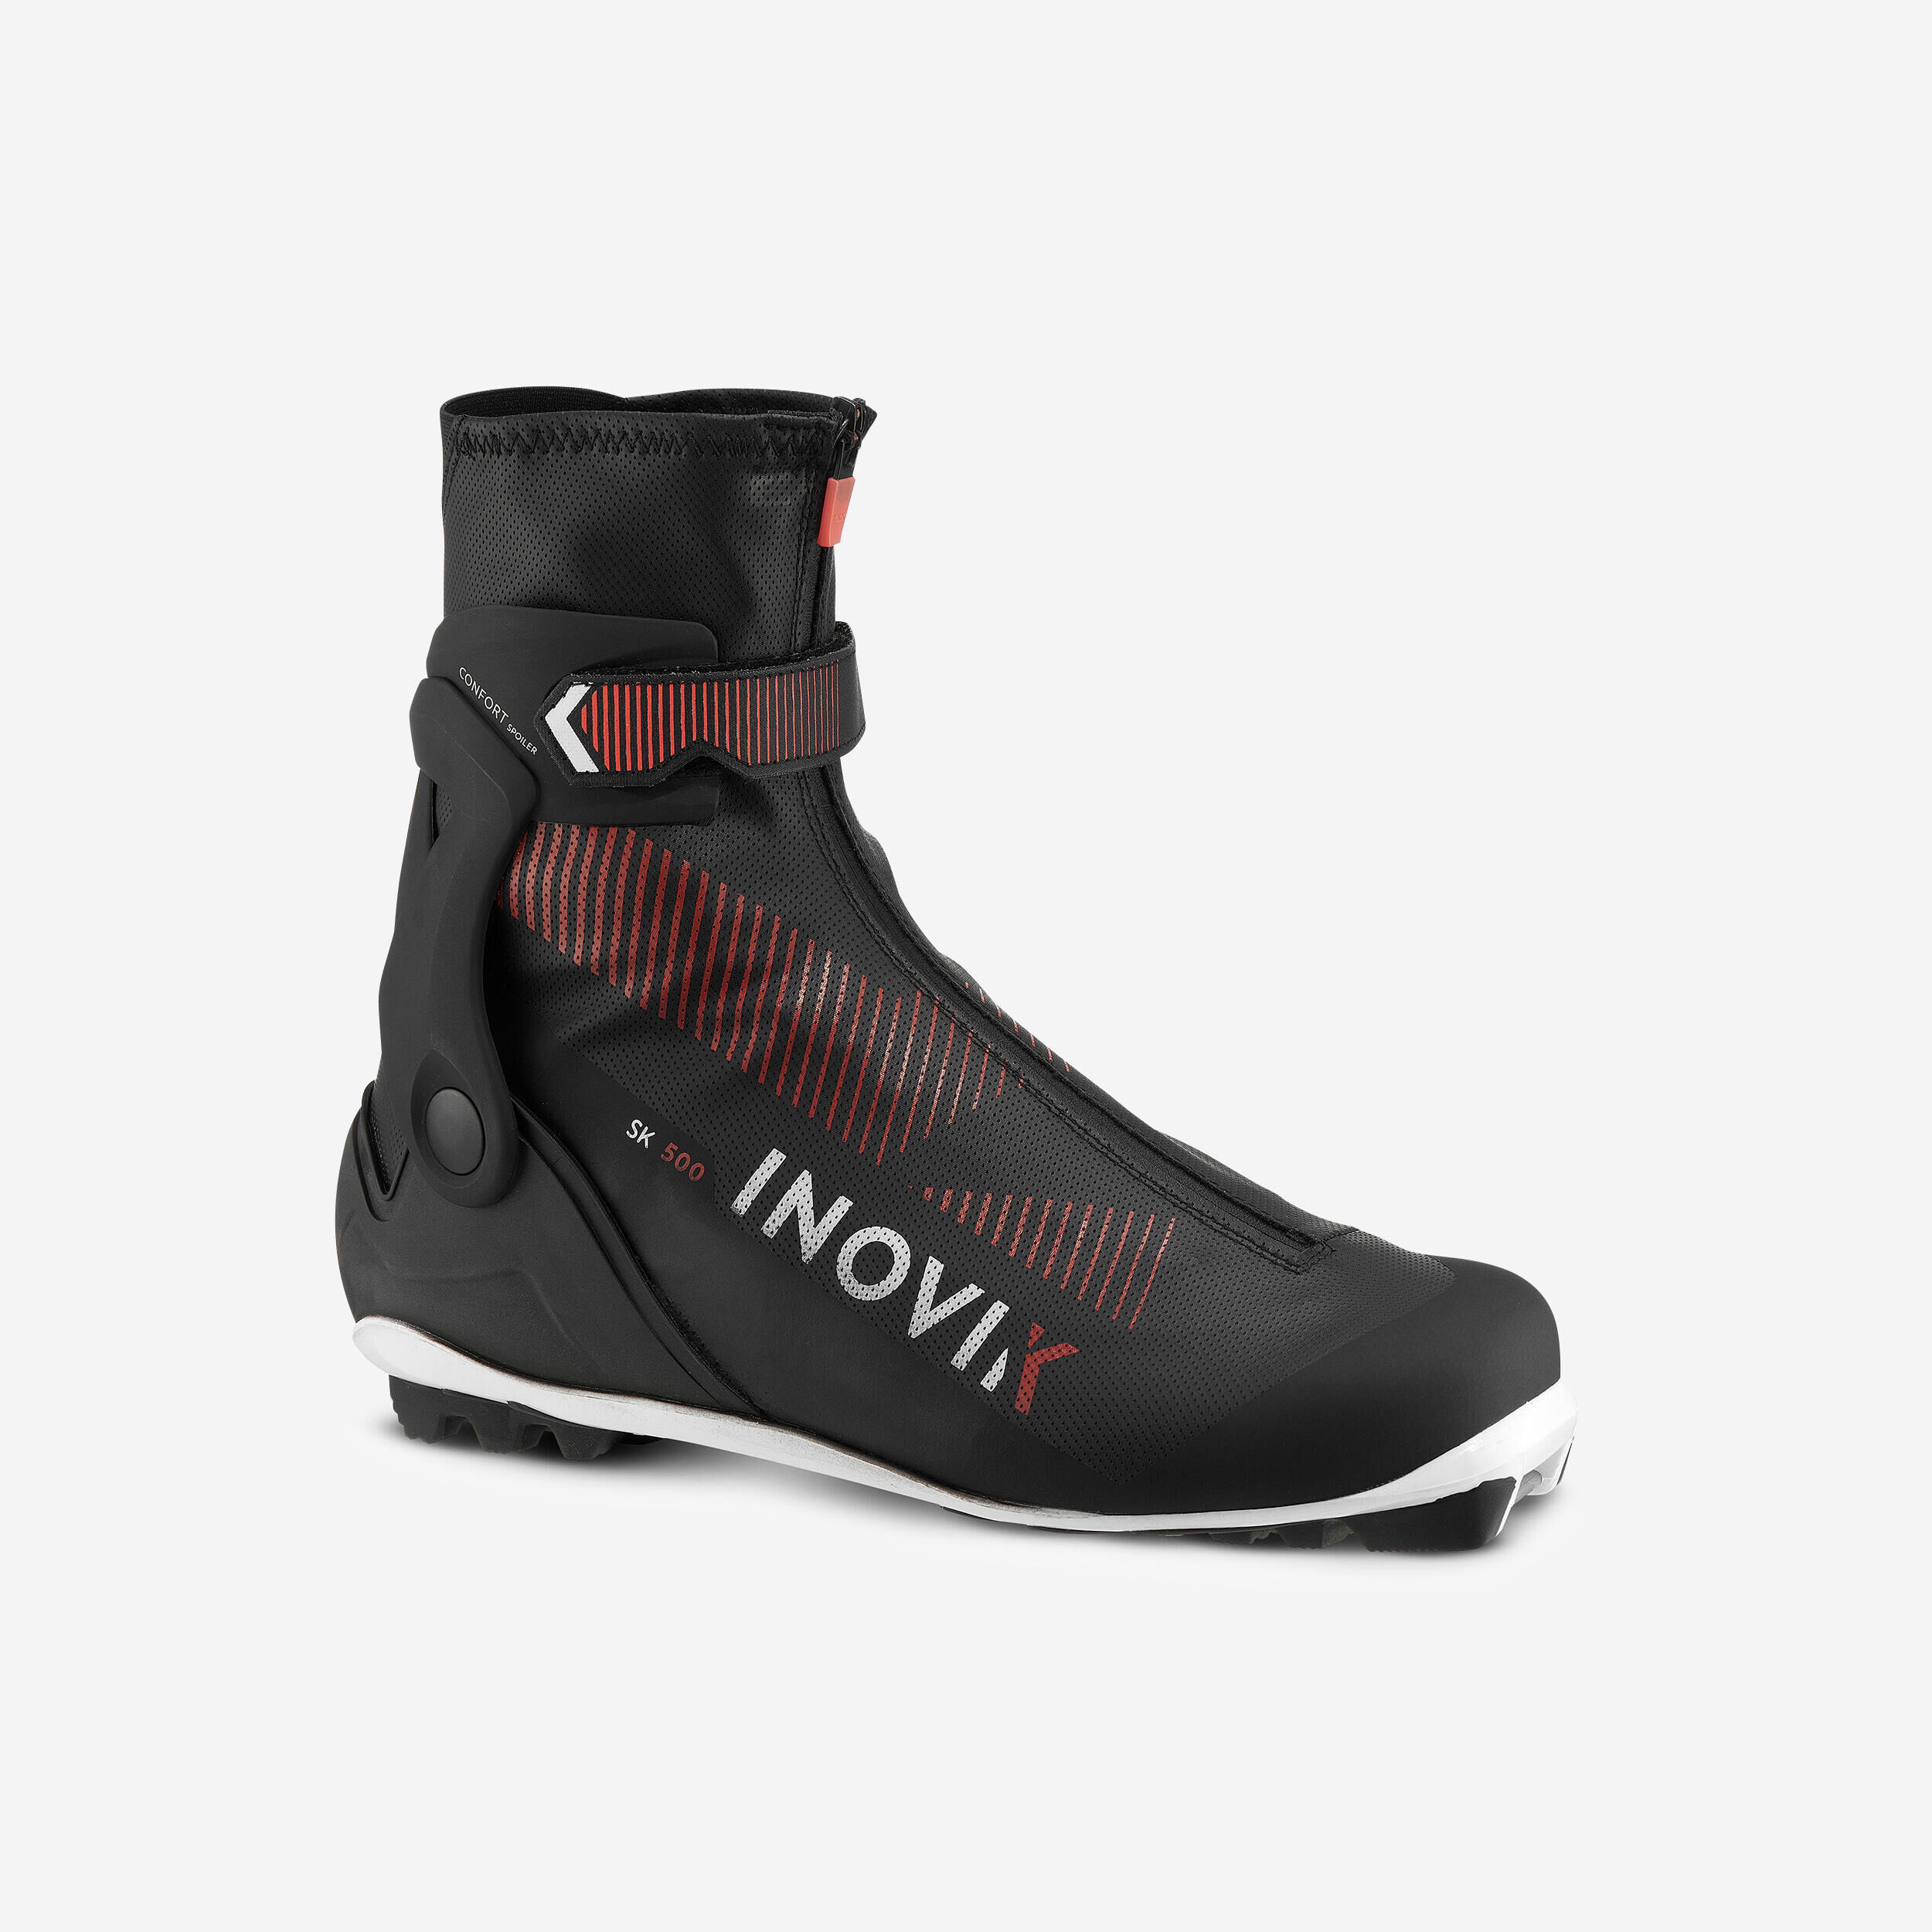 INOVIK MEN’S Skate Boot Cross-country Ski Skating Boots XC S 500